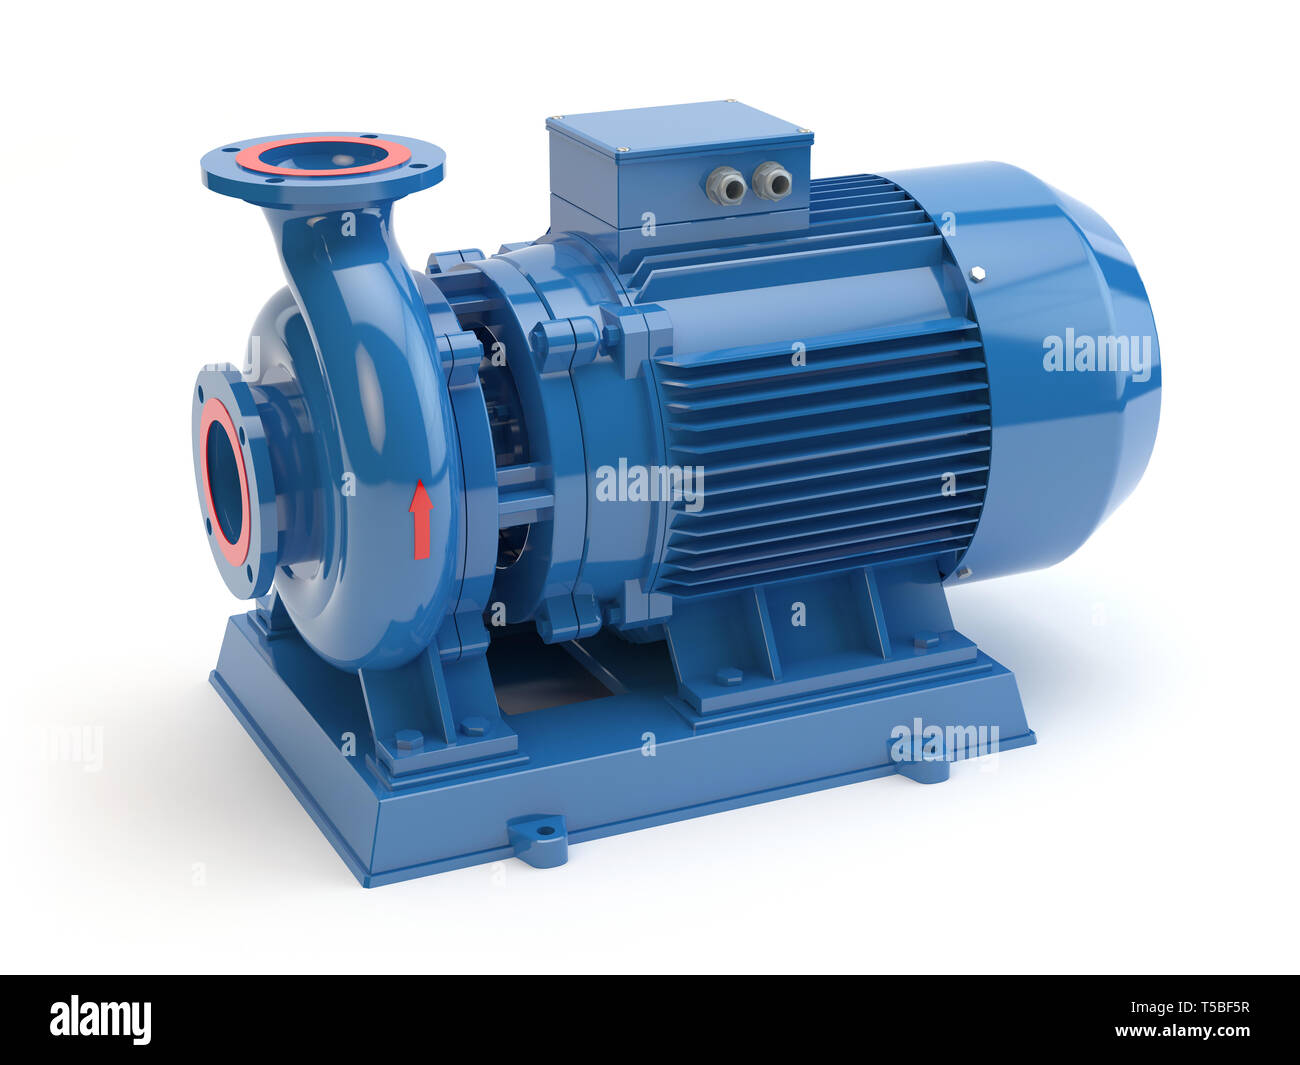 https://c8.alamy.com/comp/T5BF5R/blue-electric-water-pump-3d-illustration-T5BF5R.jpg